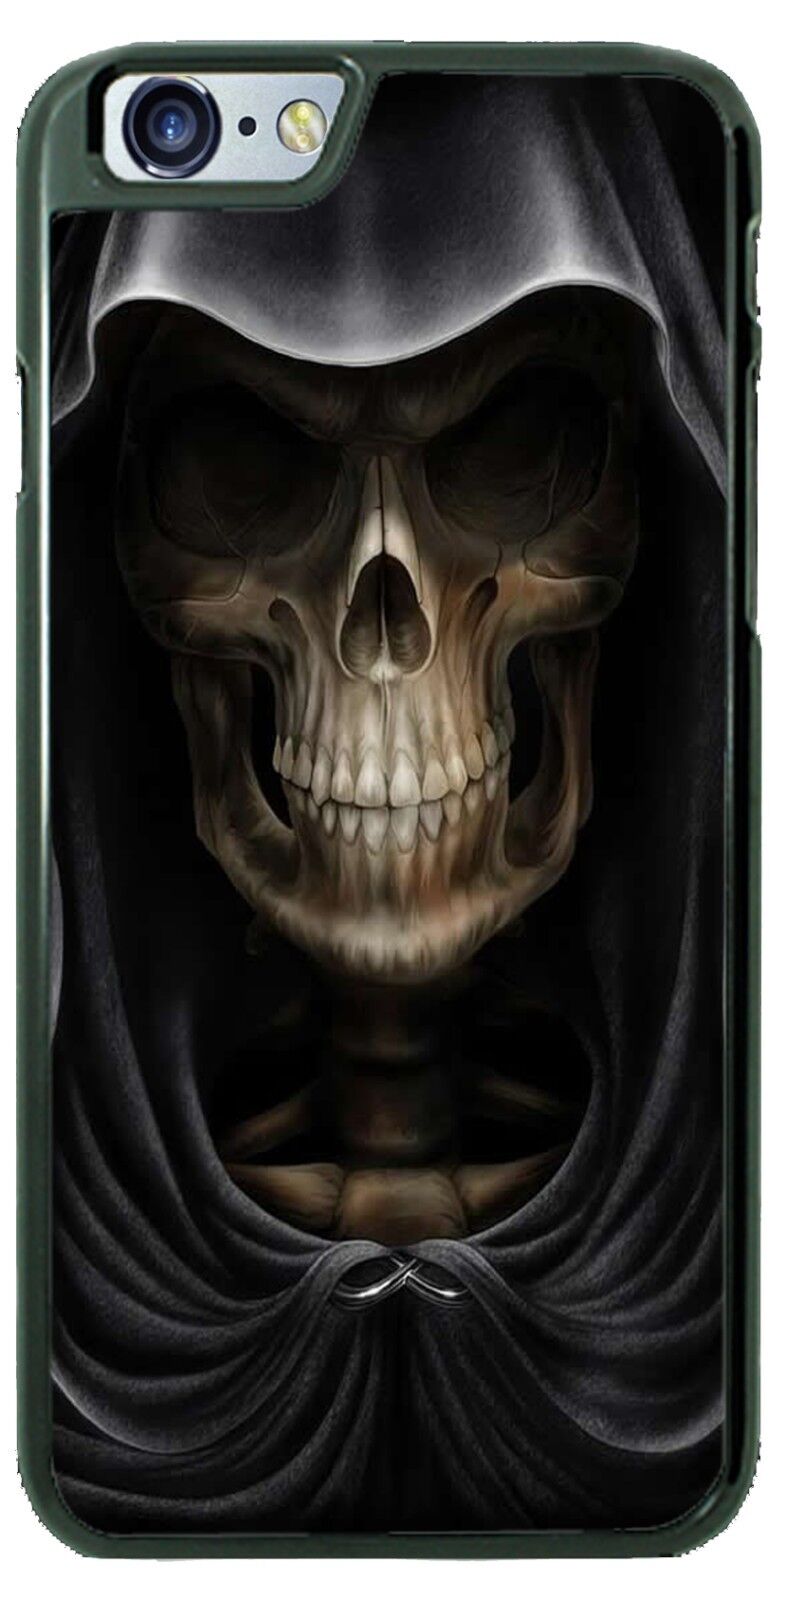 Sherlock Holmes militia Essentially Grim Reaper Death Horror Scary Phone Case Cover Fits iPhone Samsung Google  etc | eBay